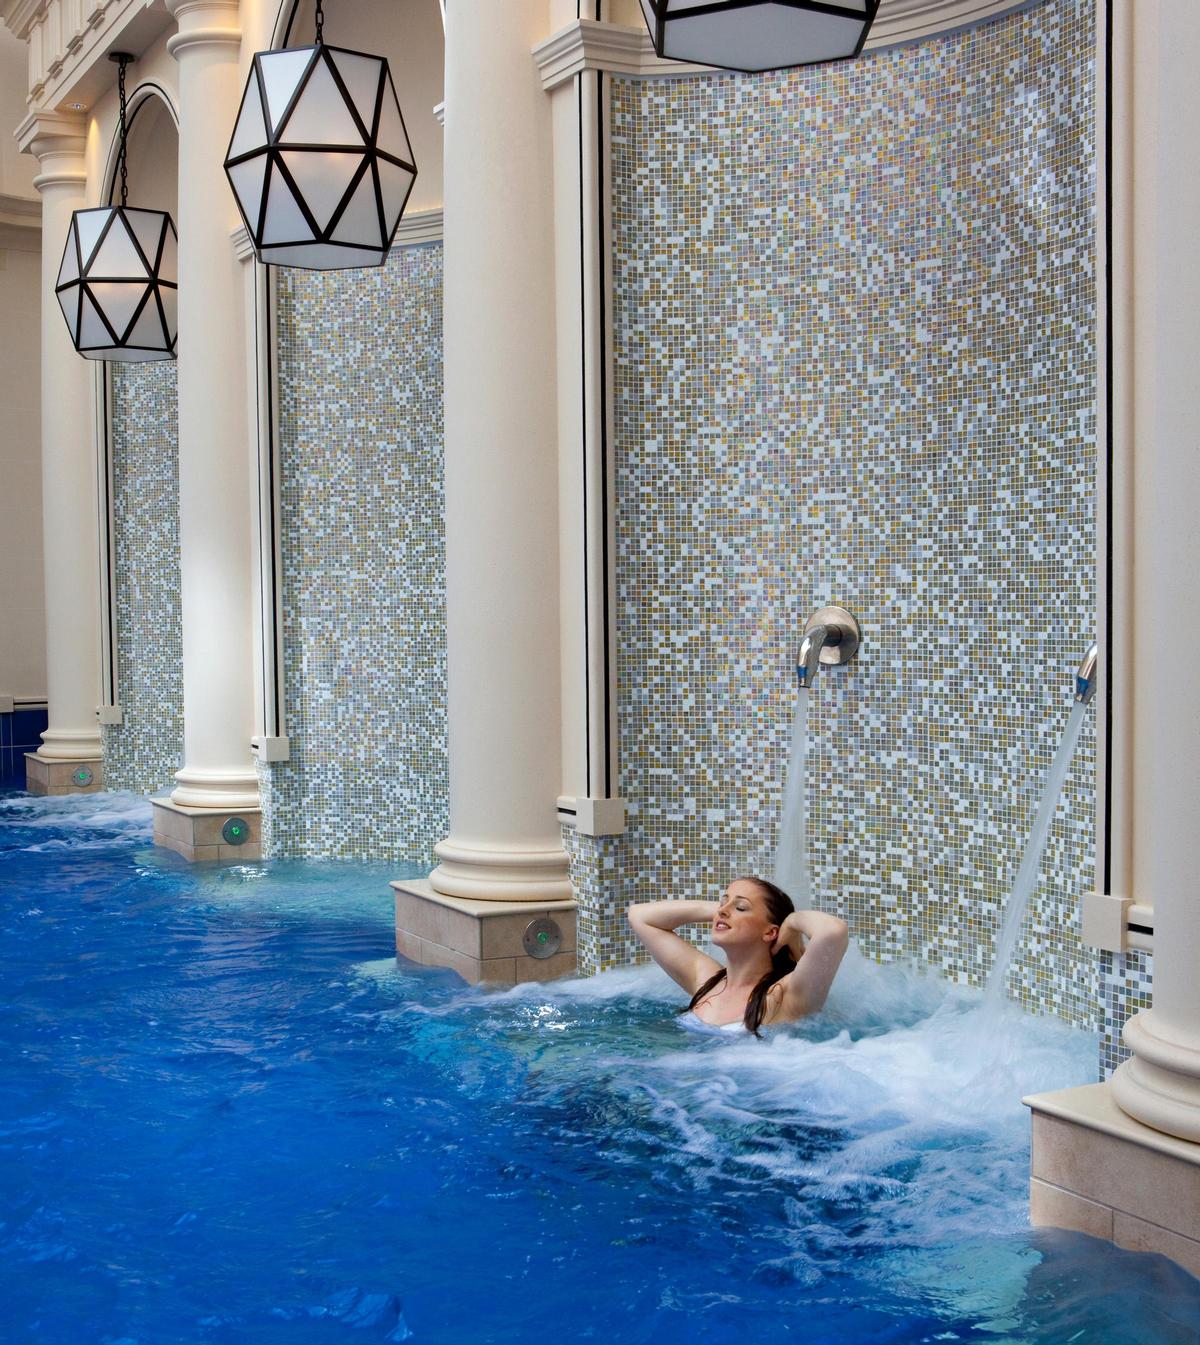 Bath, England is home to YTL Hotels' Gainsborough Bath Spa / 